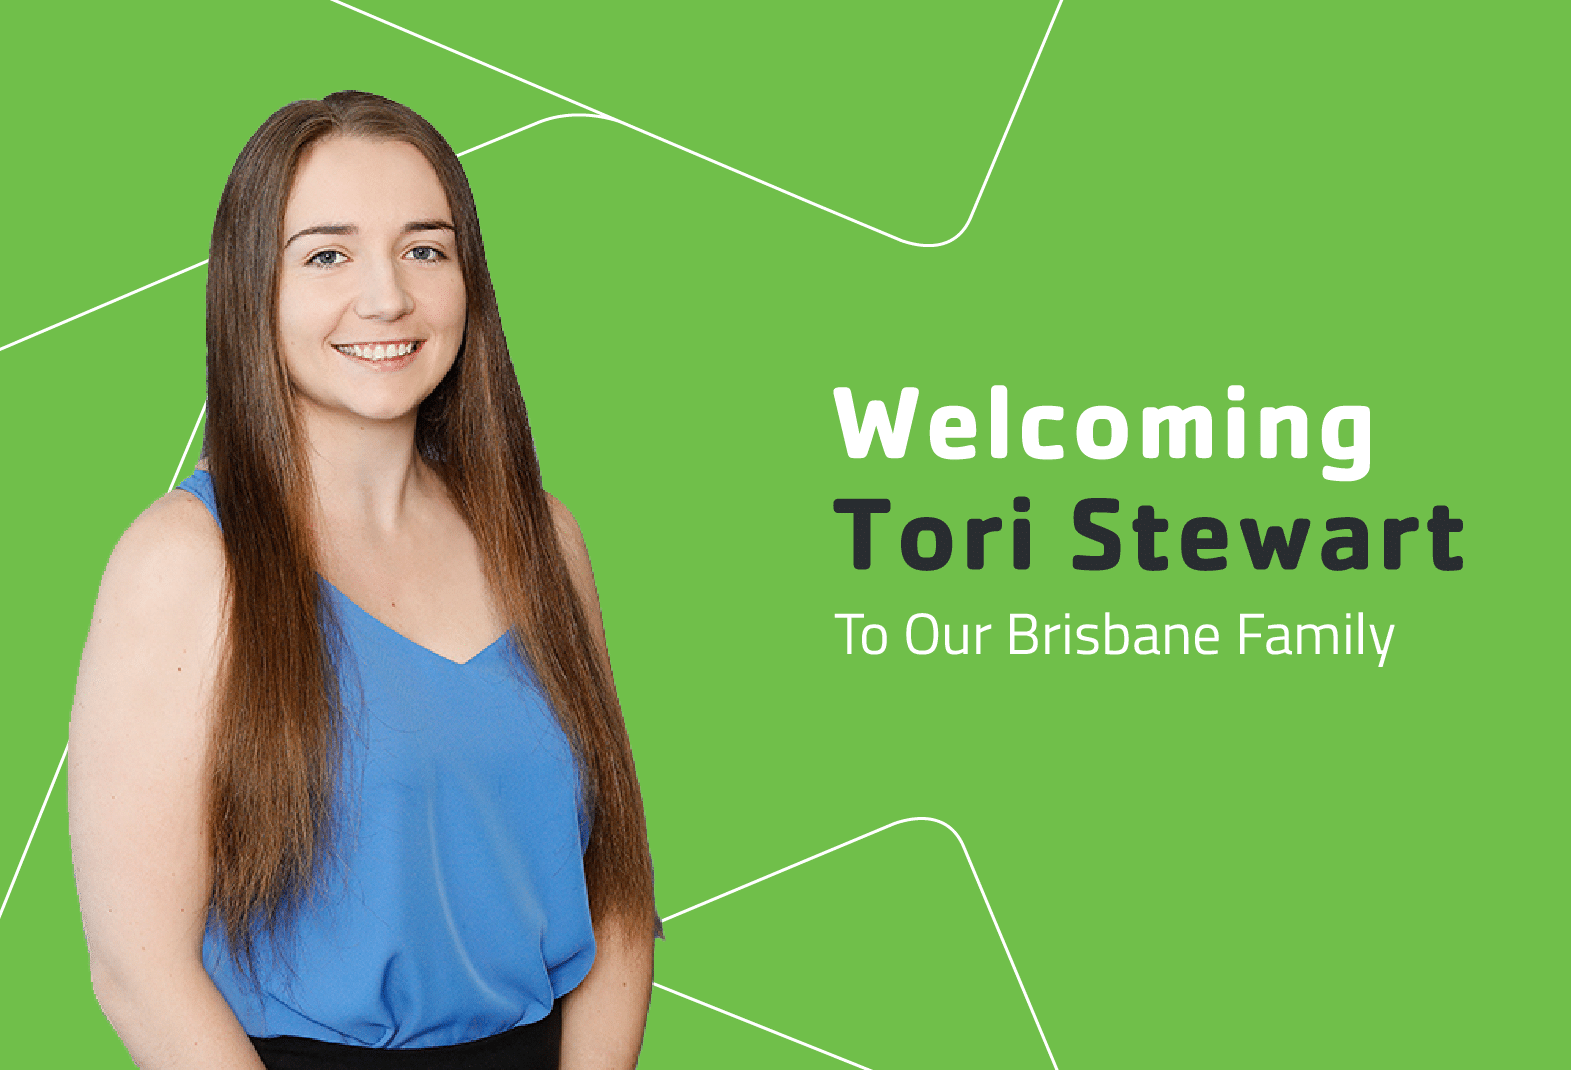 New Brisbane Carbonite Announcement: Tori Stewart